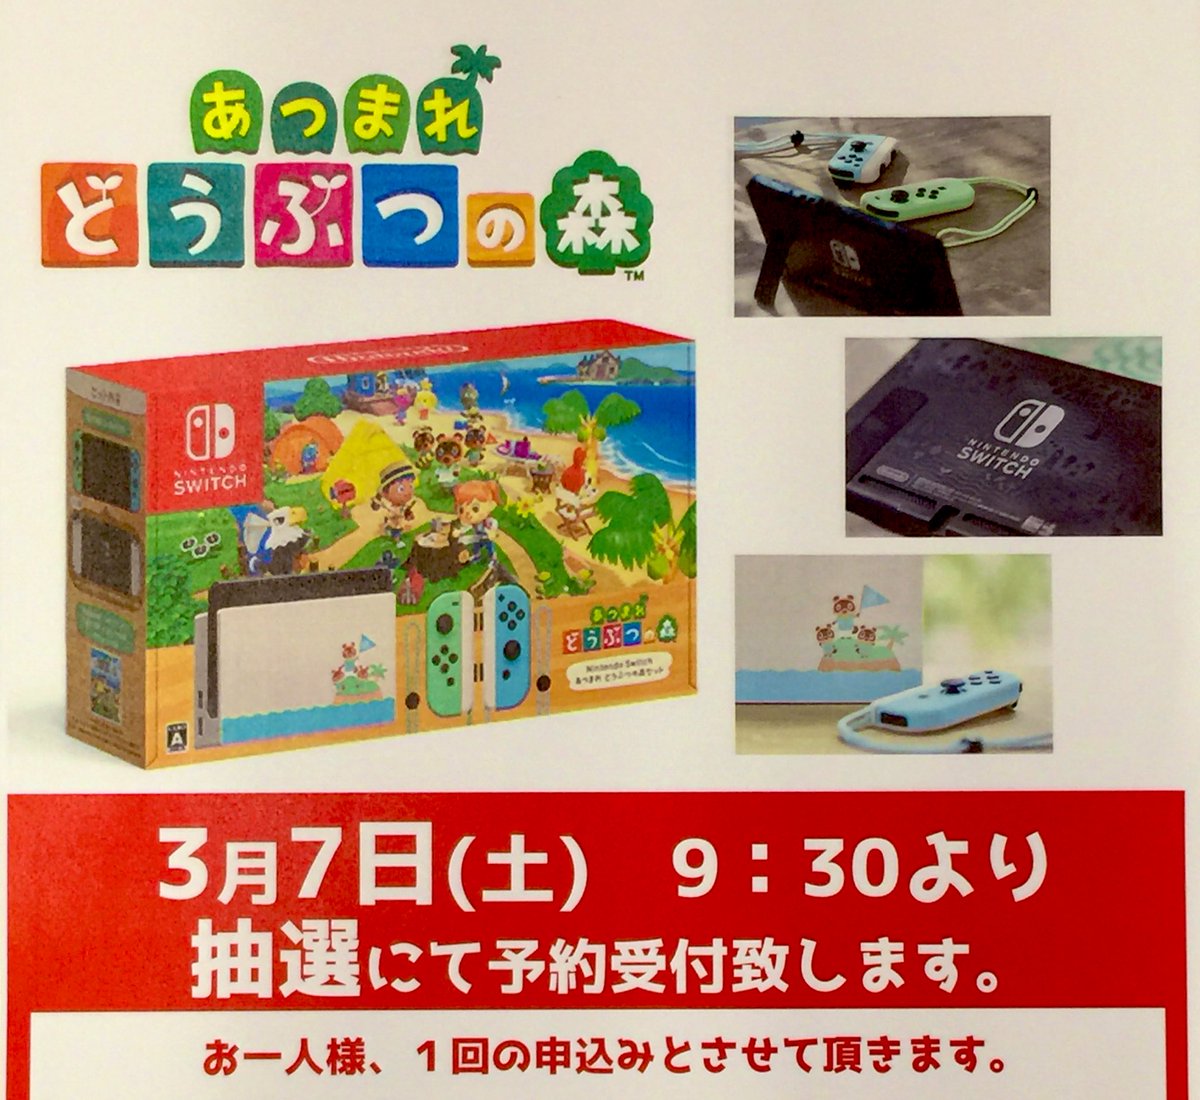 Nintendo Switch あつまれ どうぶつの森セット について抽選での予約受付を行うとtsutaya Book Garage 枚方ベルパルレ店が発表 Nintendo Switch 情報ブログ